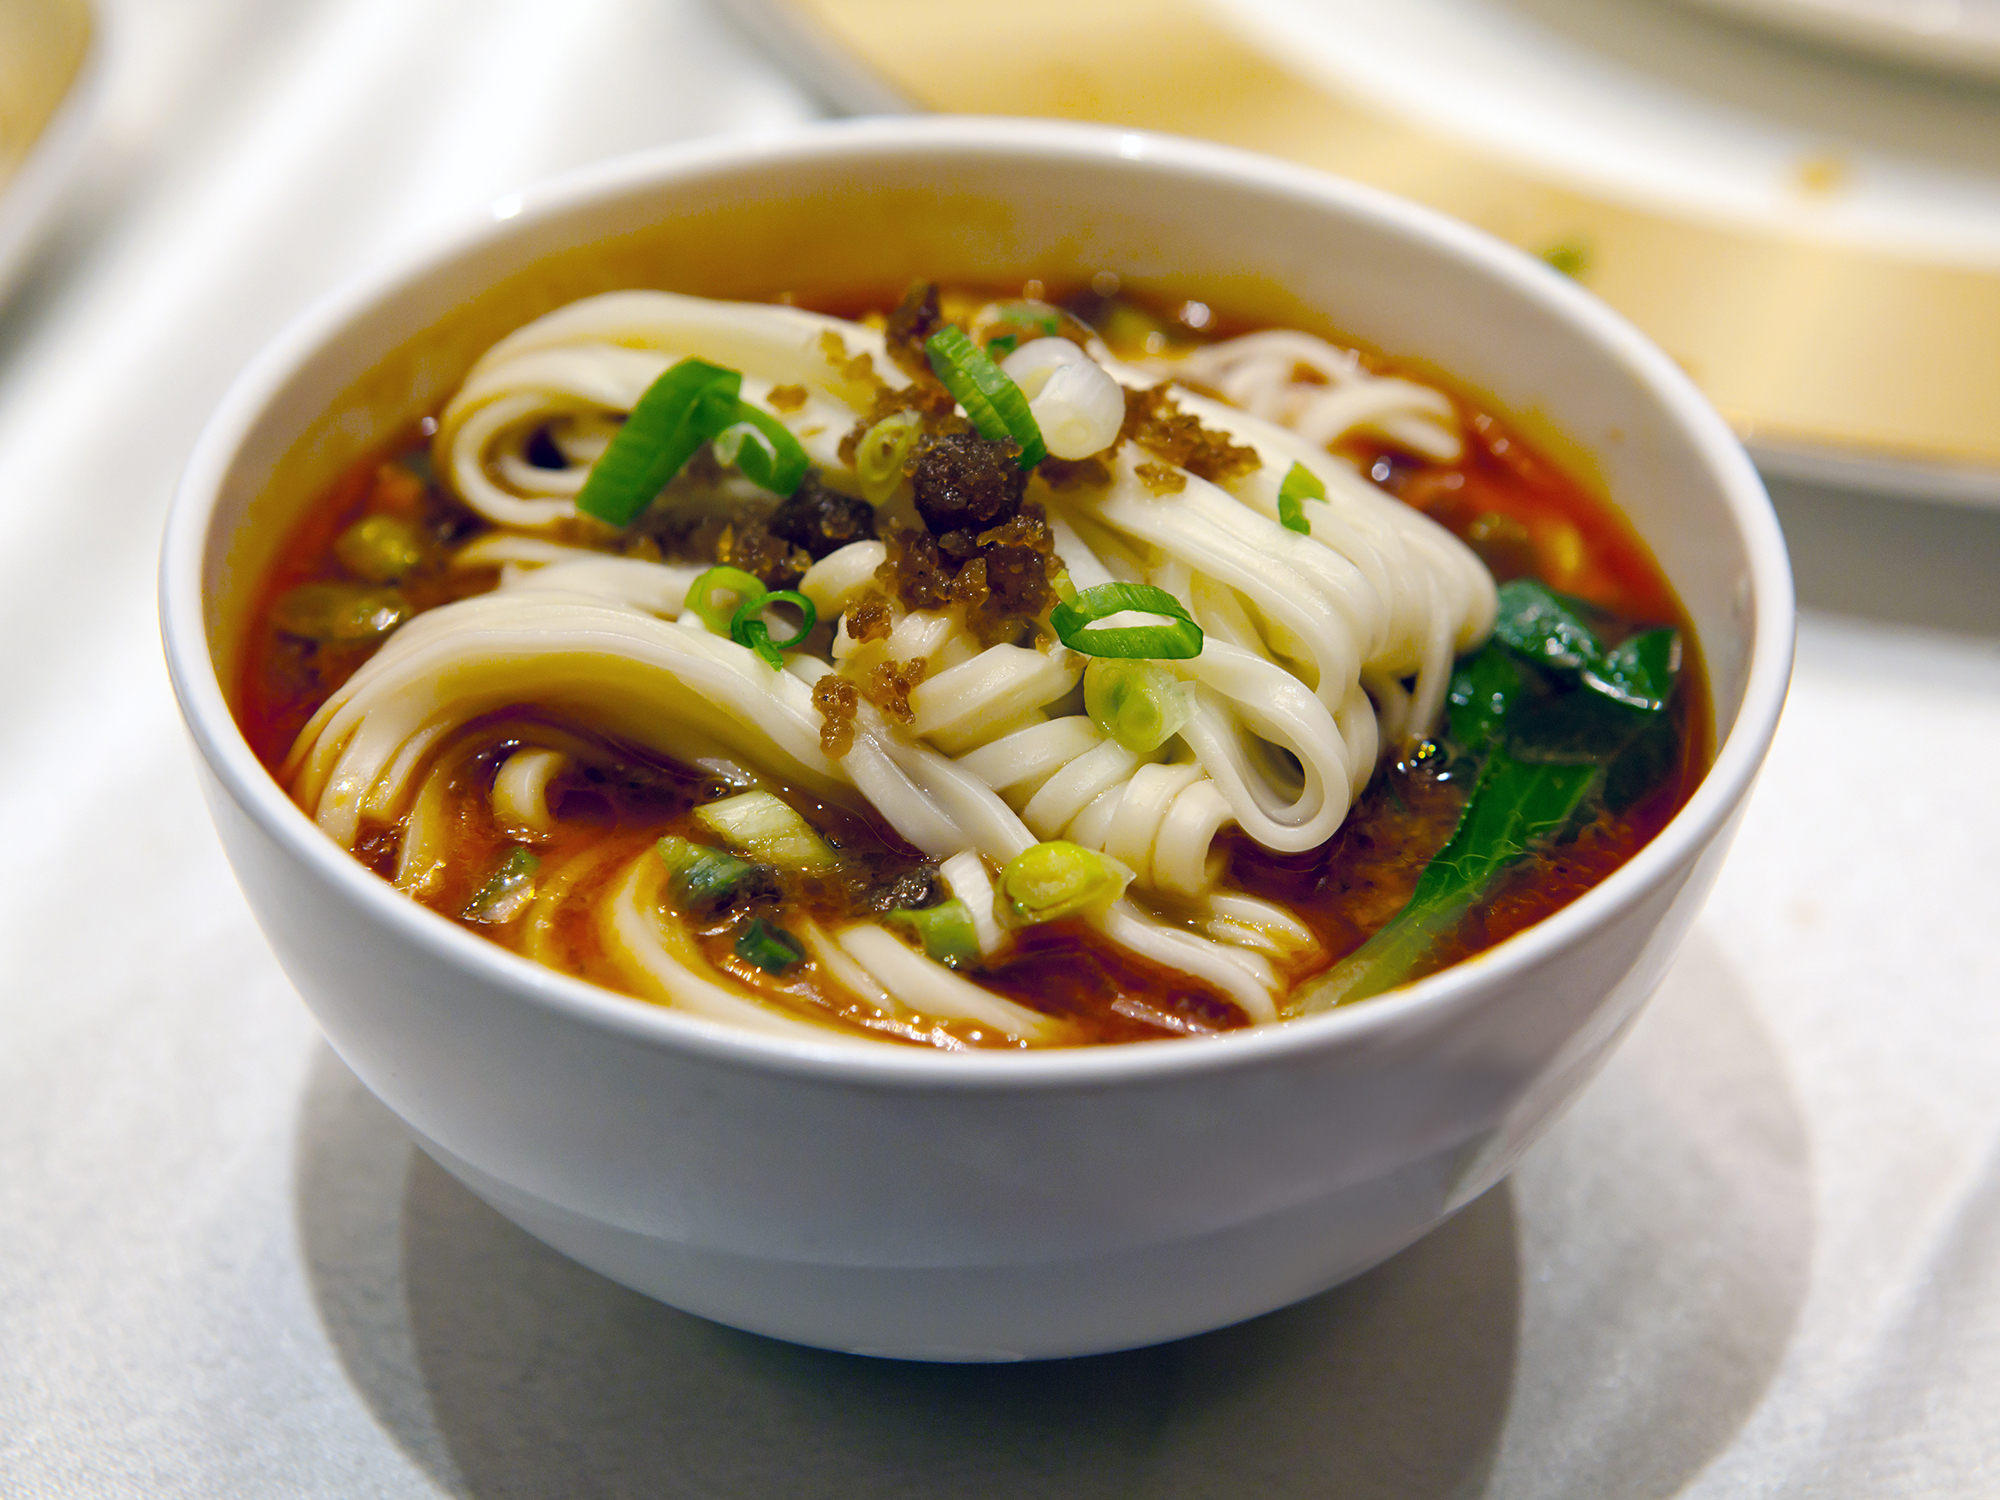 Sichuan spicy noodle